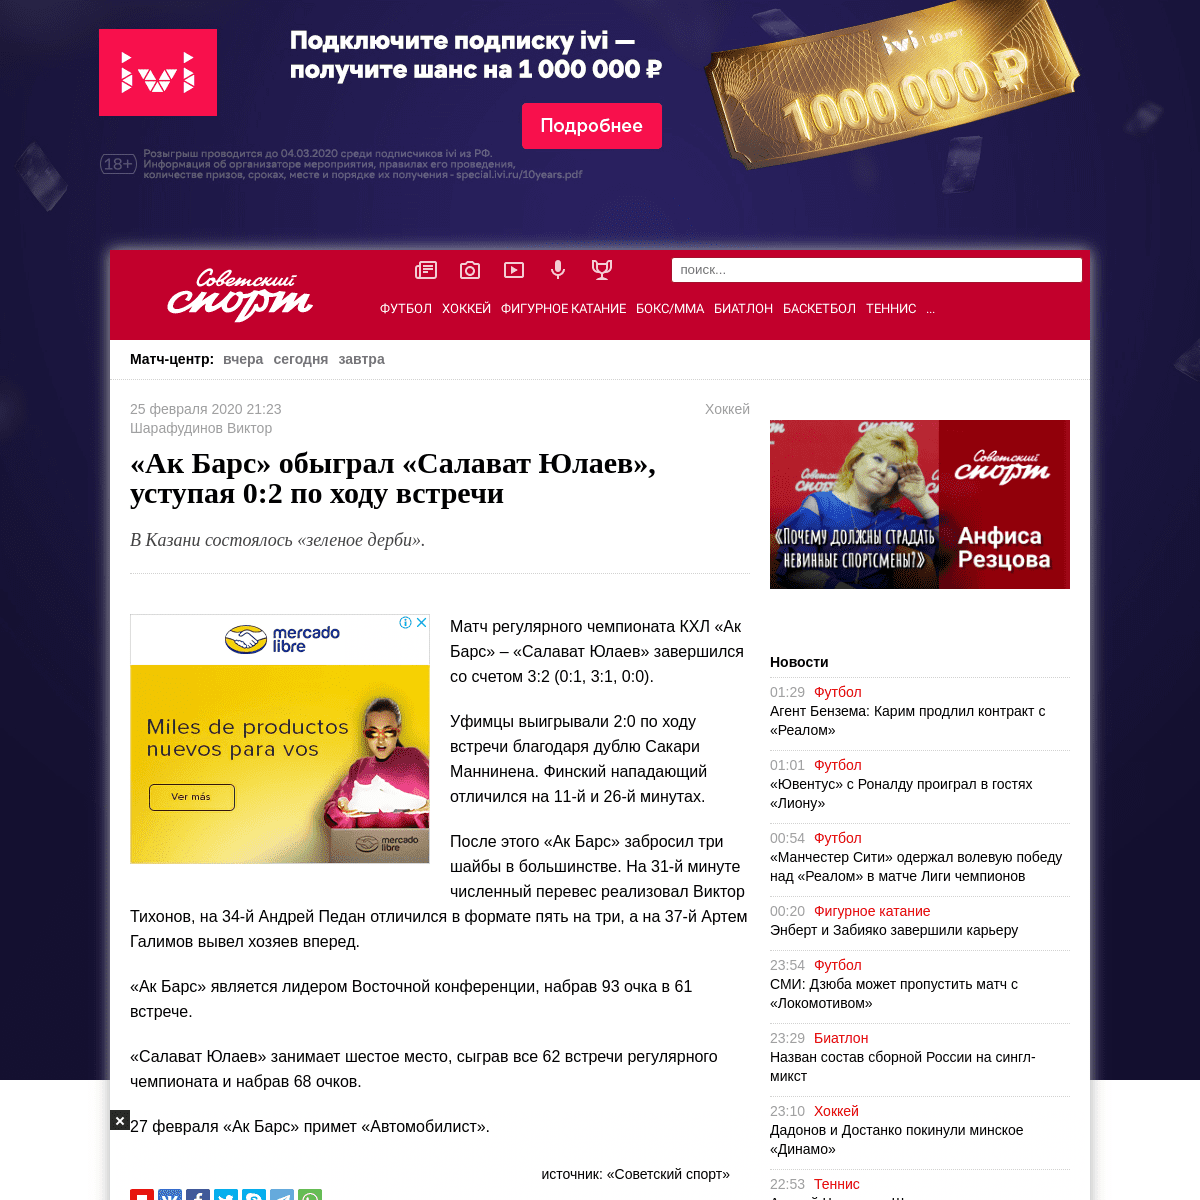 A complete backup of www.sovsport.ru/hockey/news/2:936295